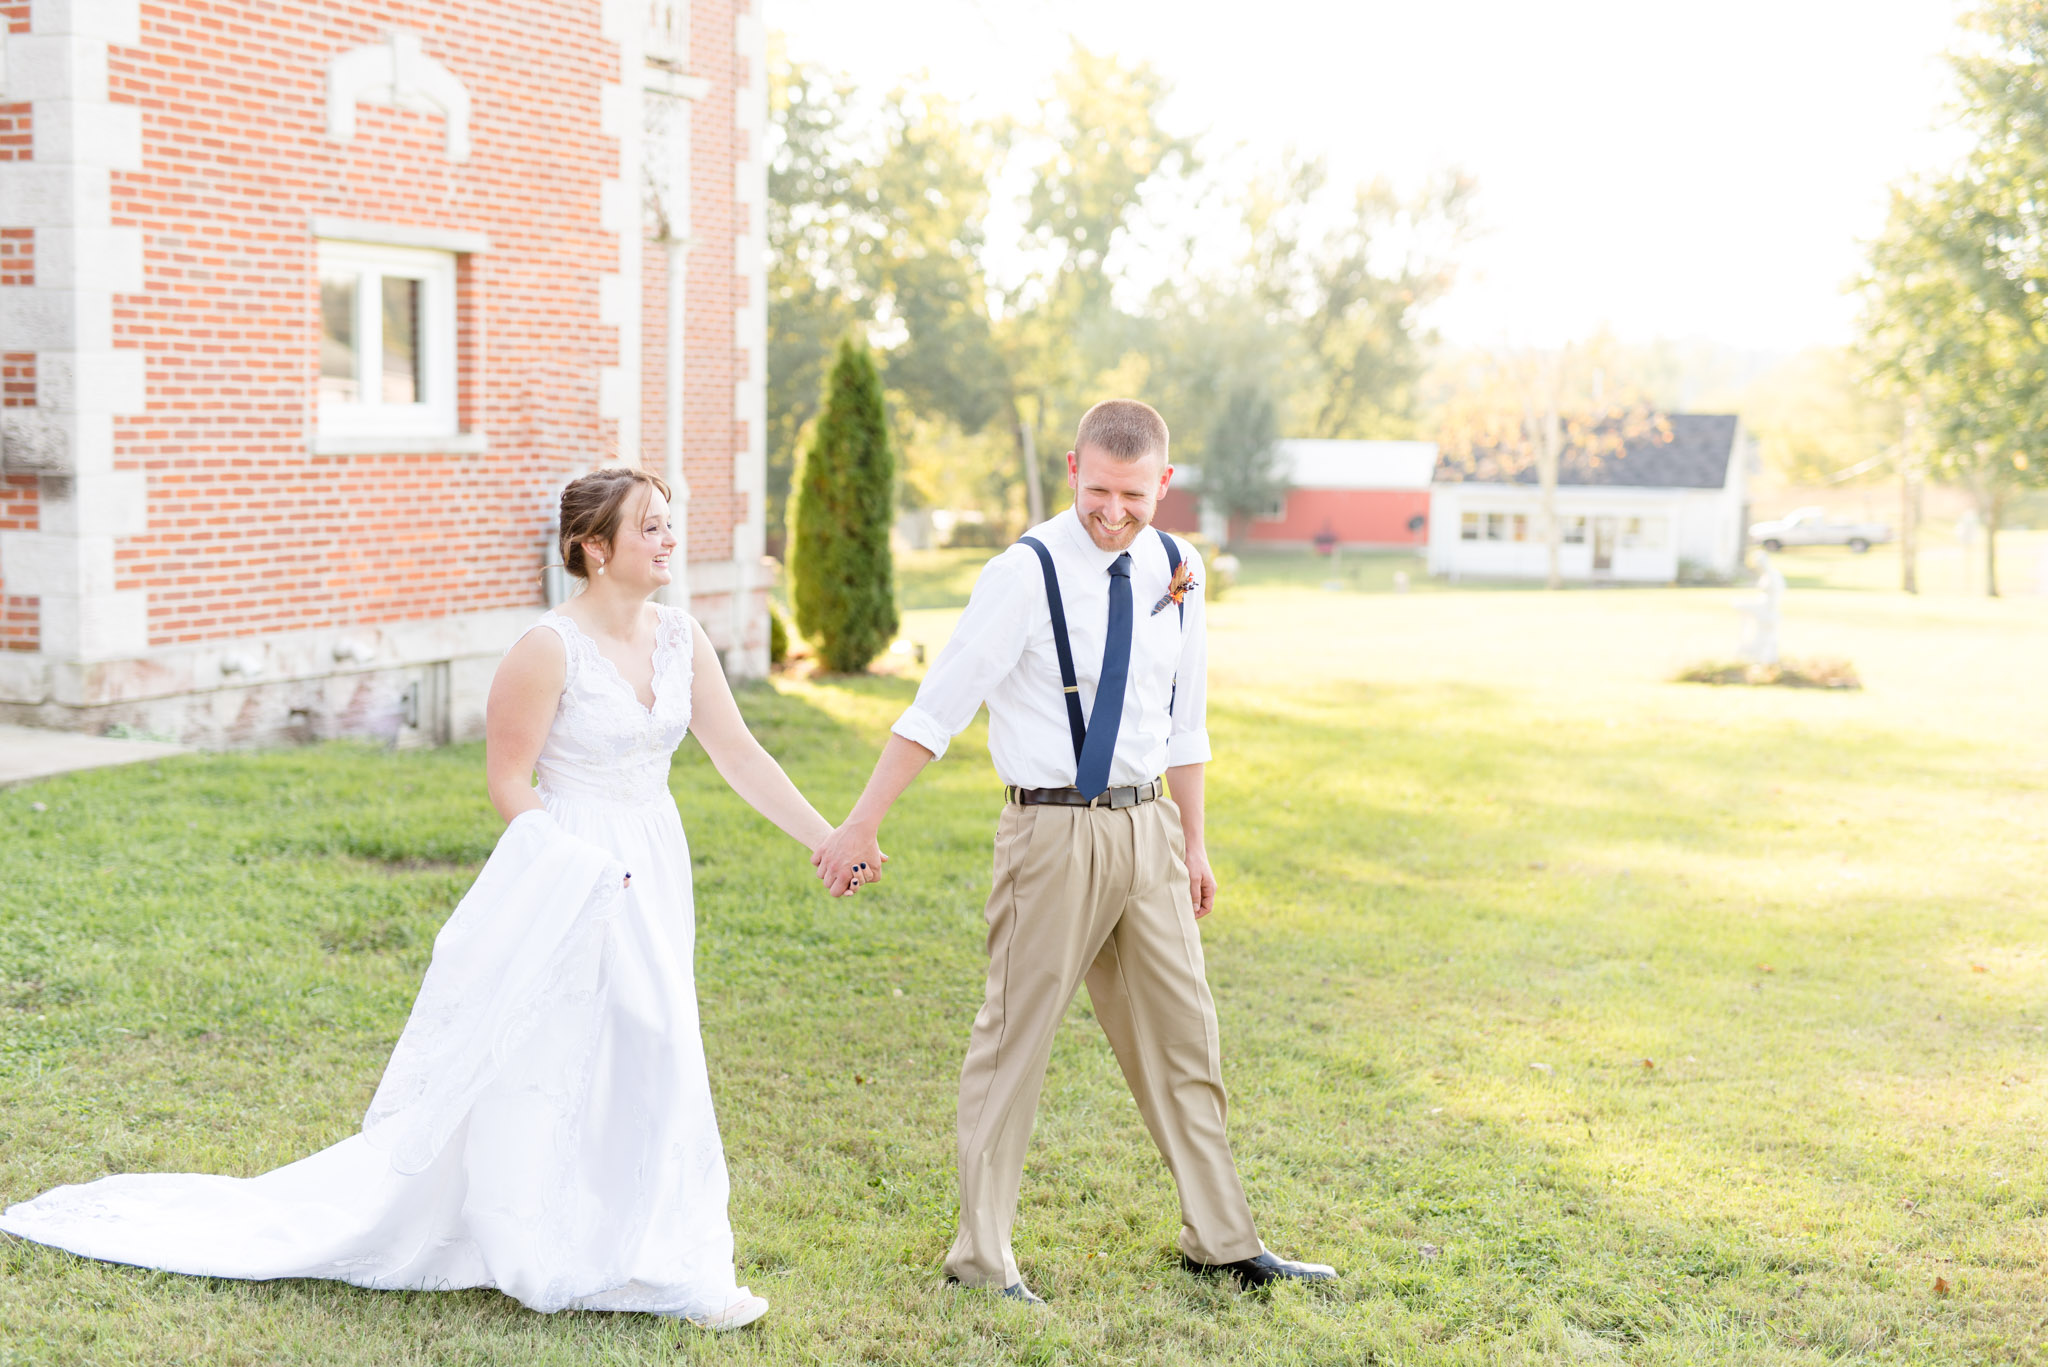 Bride and Groom walk on lawn at wedding.